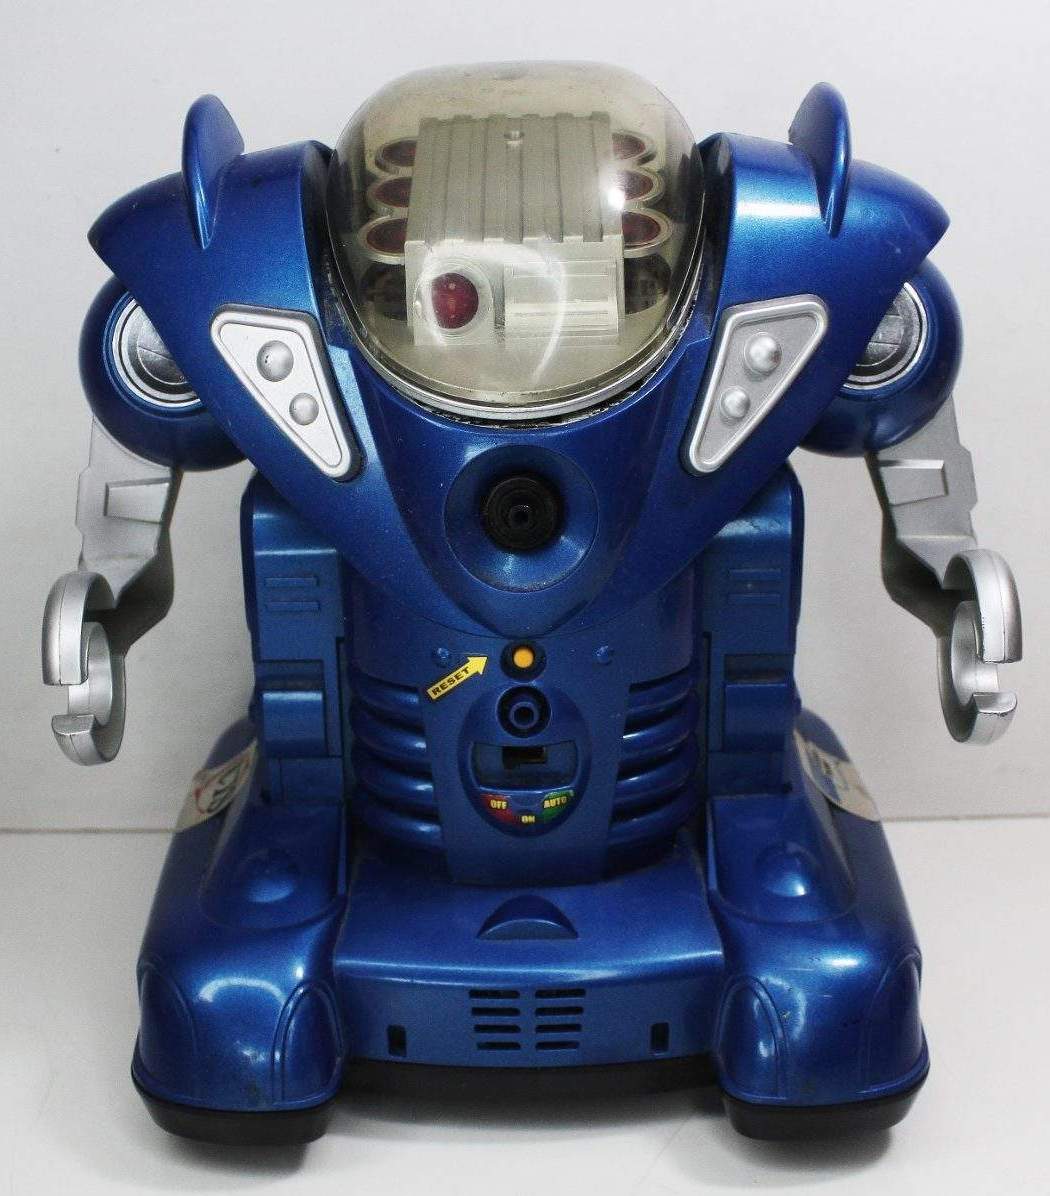 Battle Robot by Nikko - The Old Robots Web Site